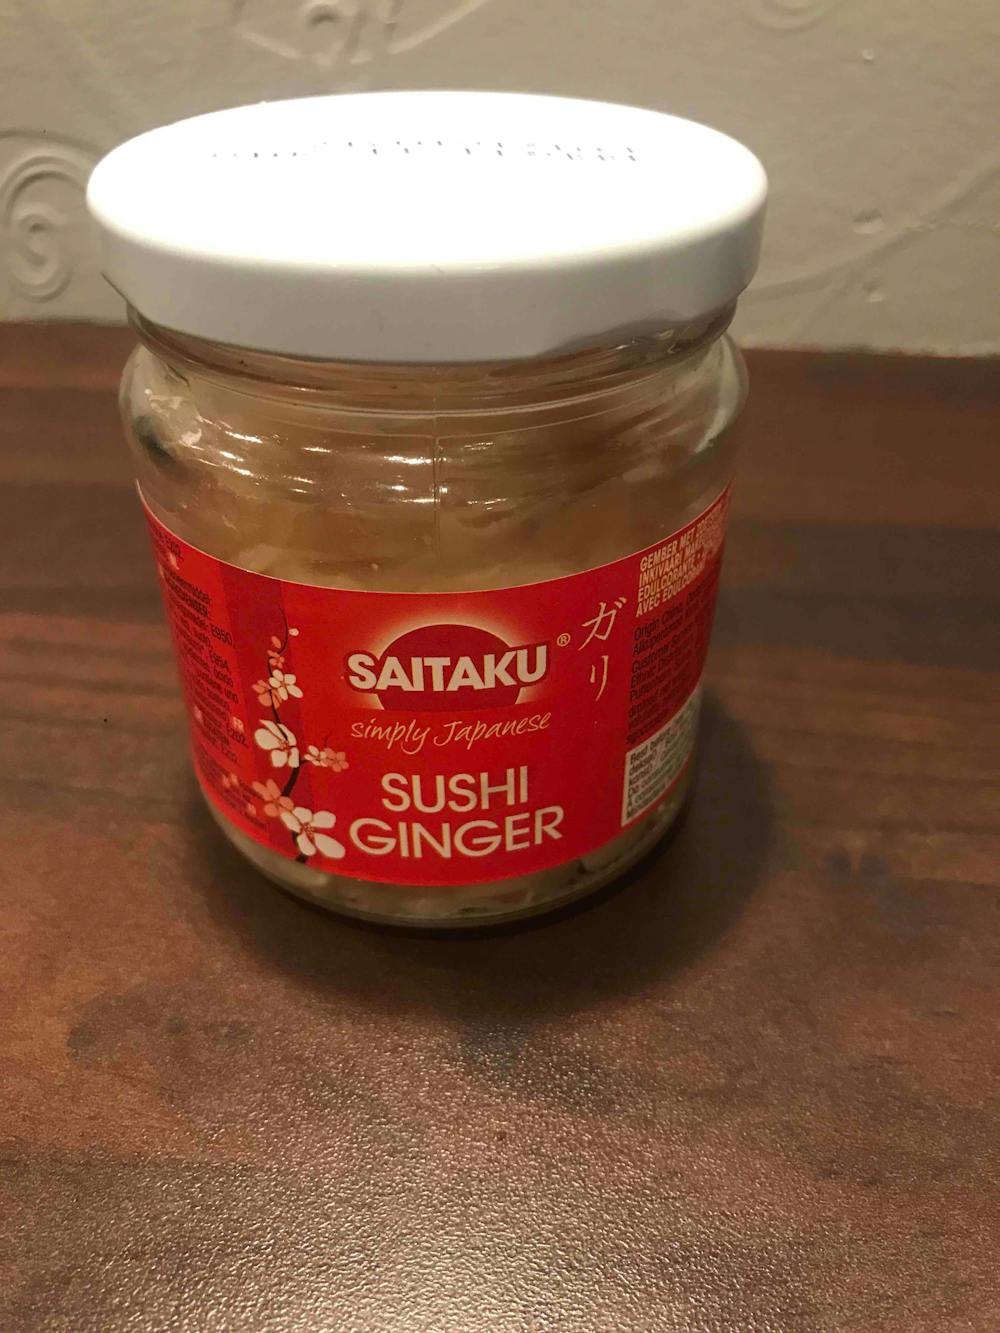 Sushi ginger, Saitaku